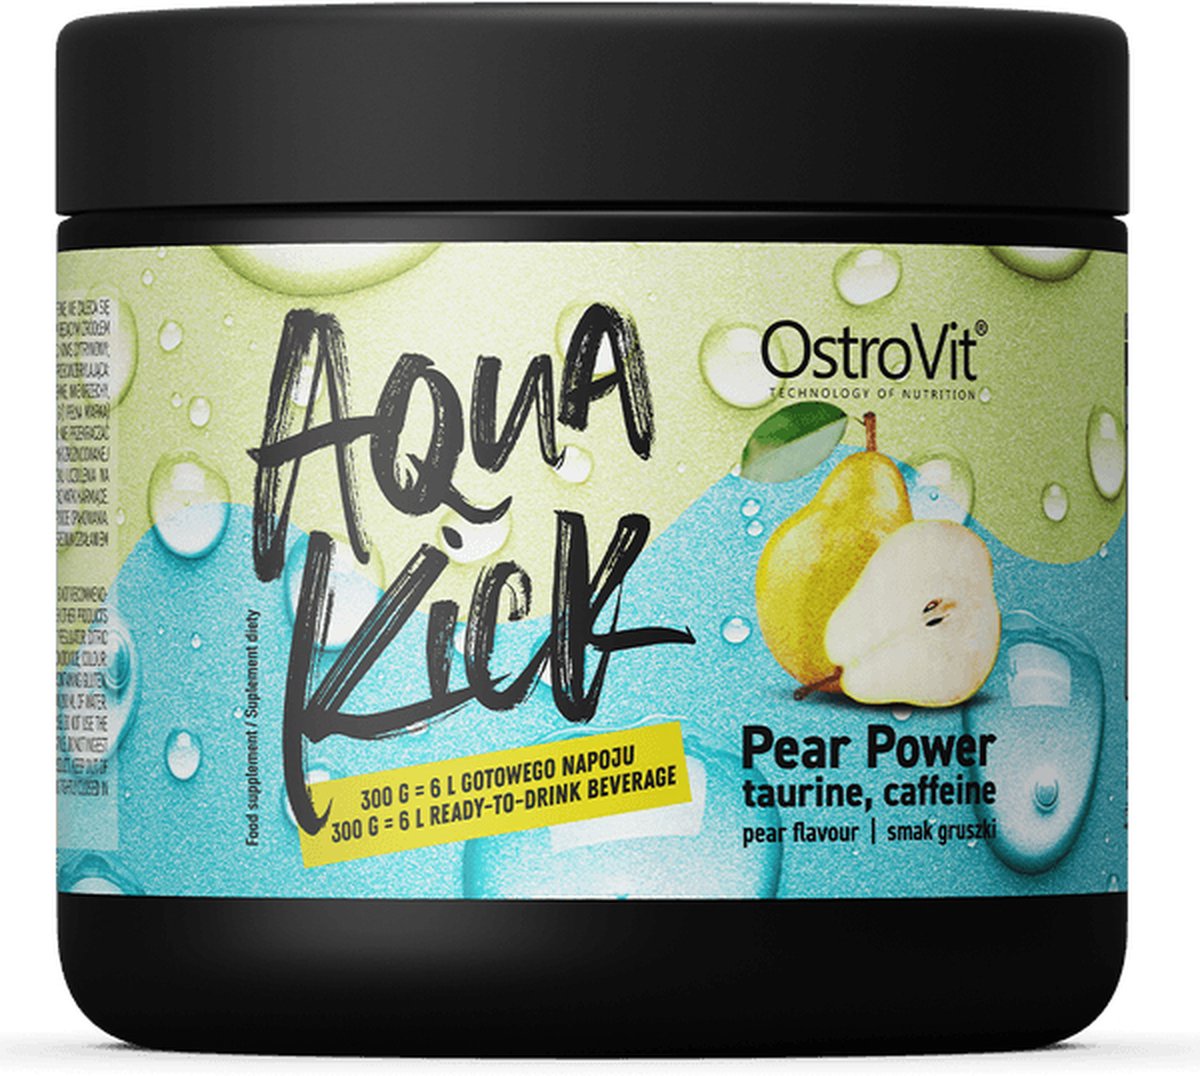 Pre-Workout - Aqua Kick Pear Power - Caffeine + Taurine - 300g - OstroVit - Peer